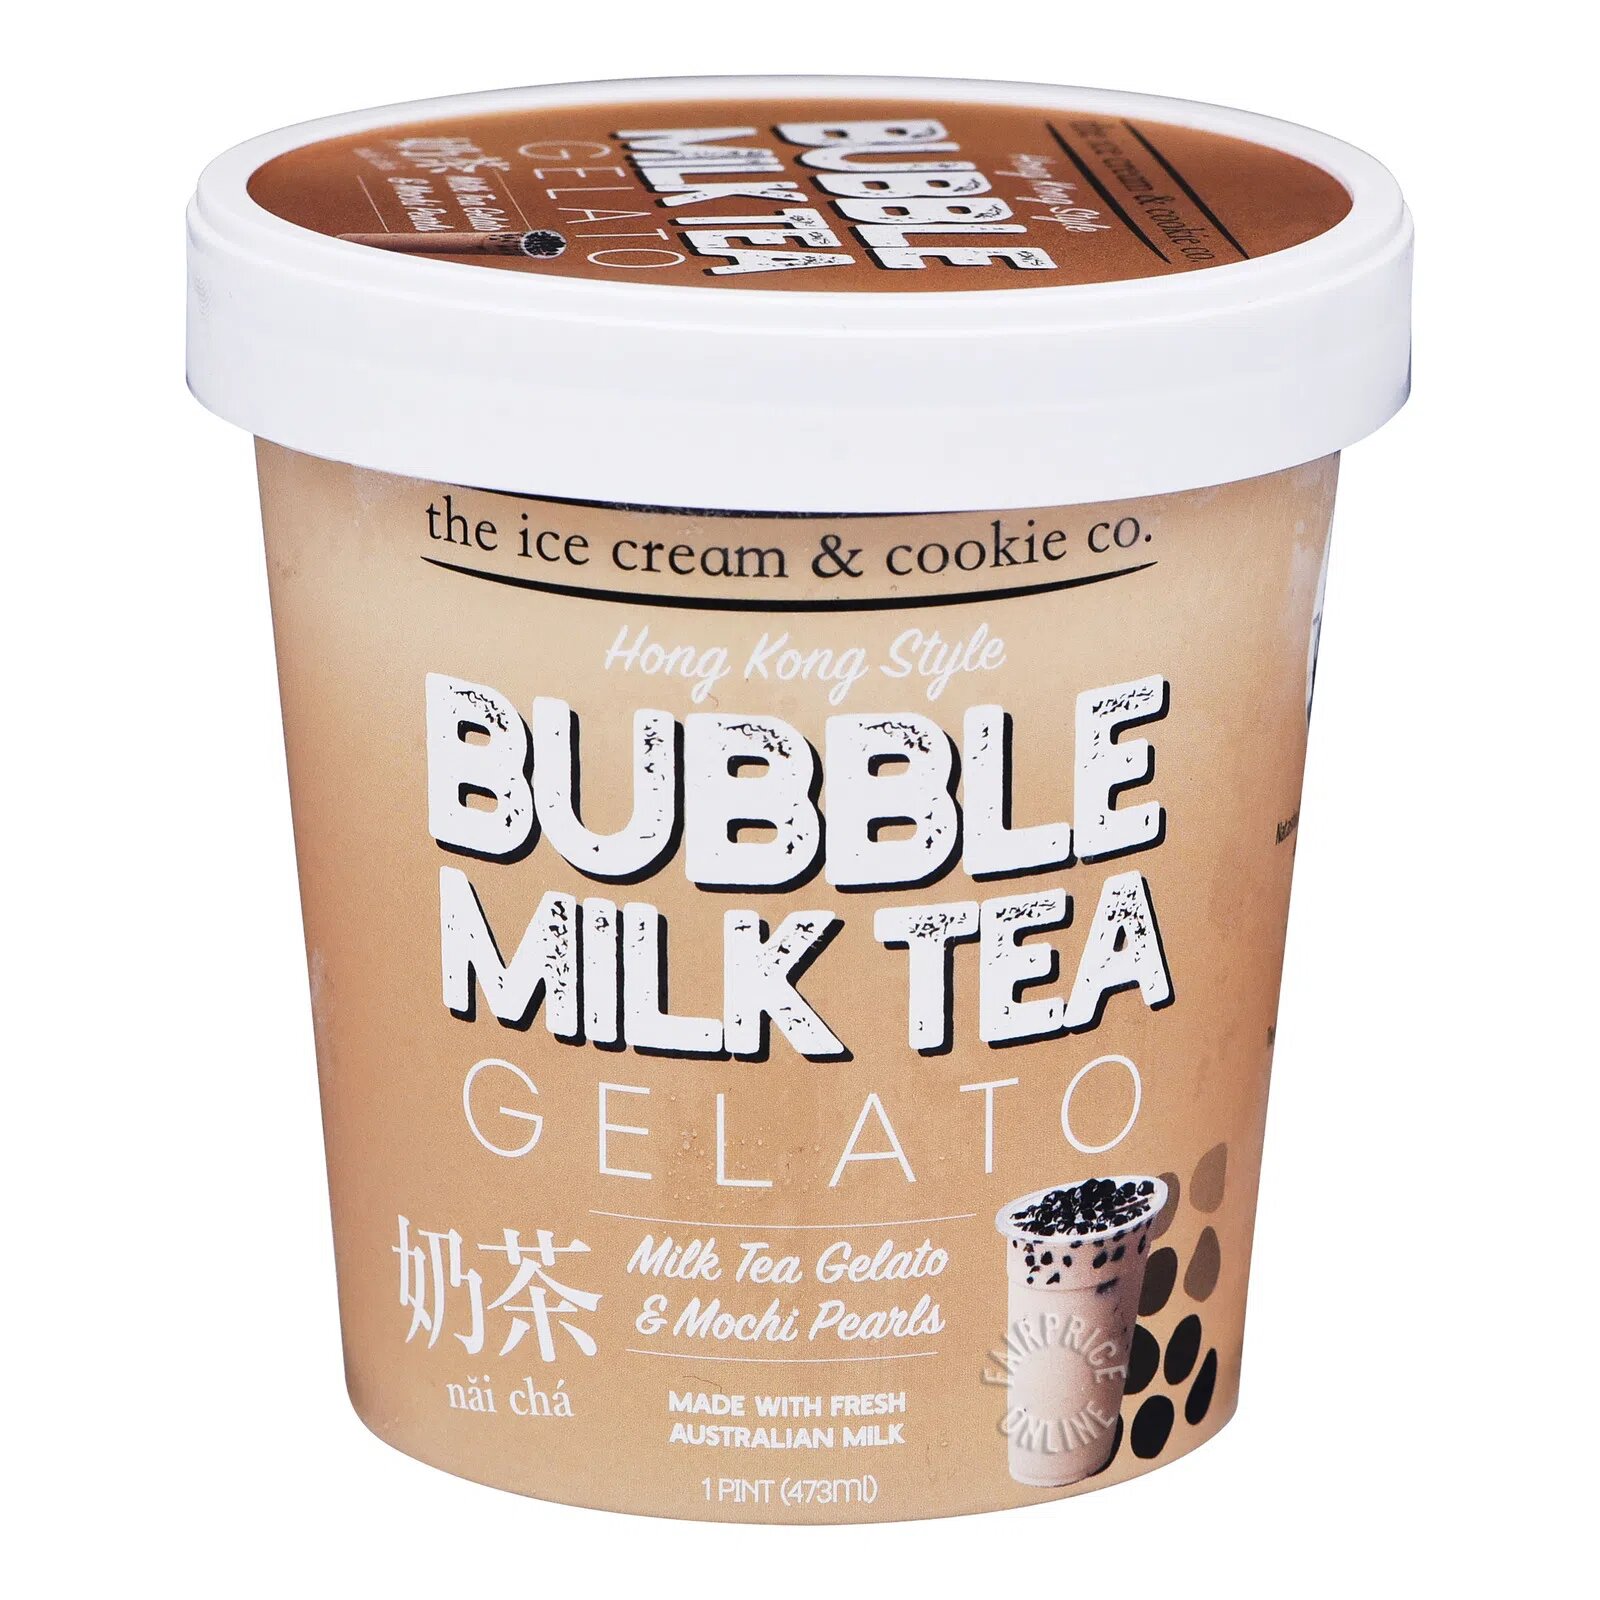 The Ice Cream & Cookie Co. Gelato Ice Cream - Bubble Milk Tea